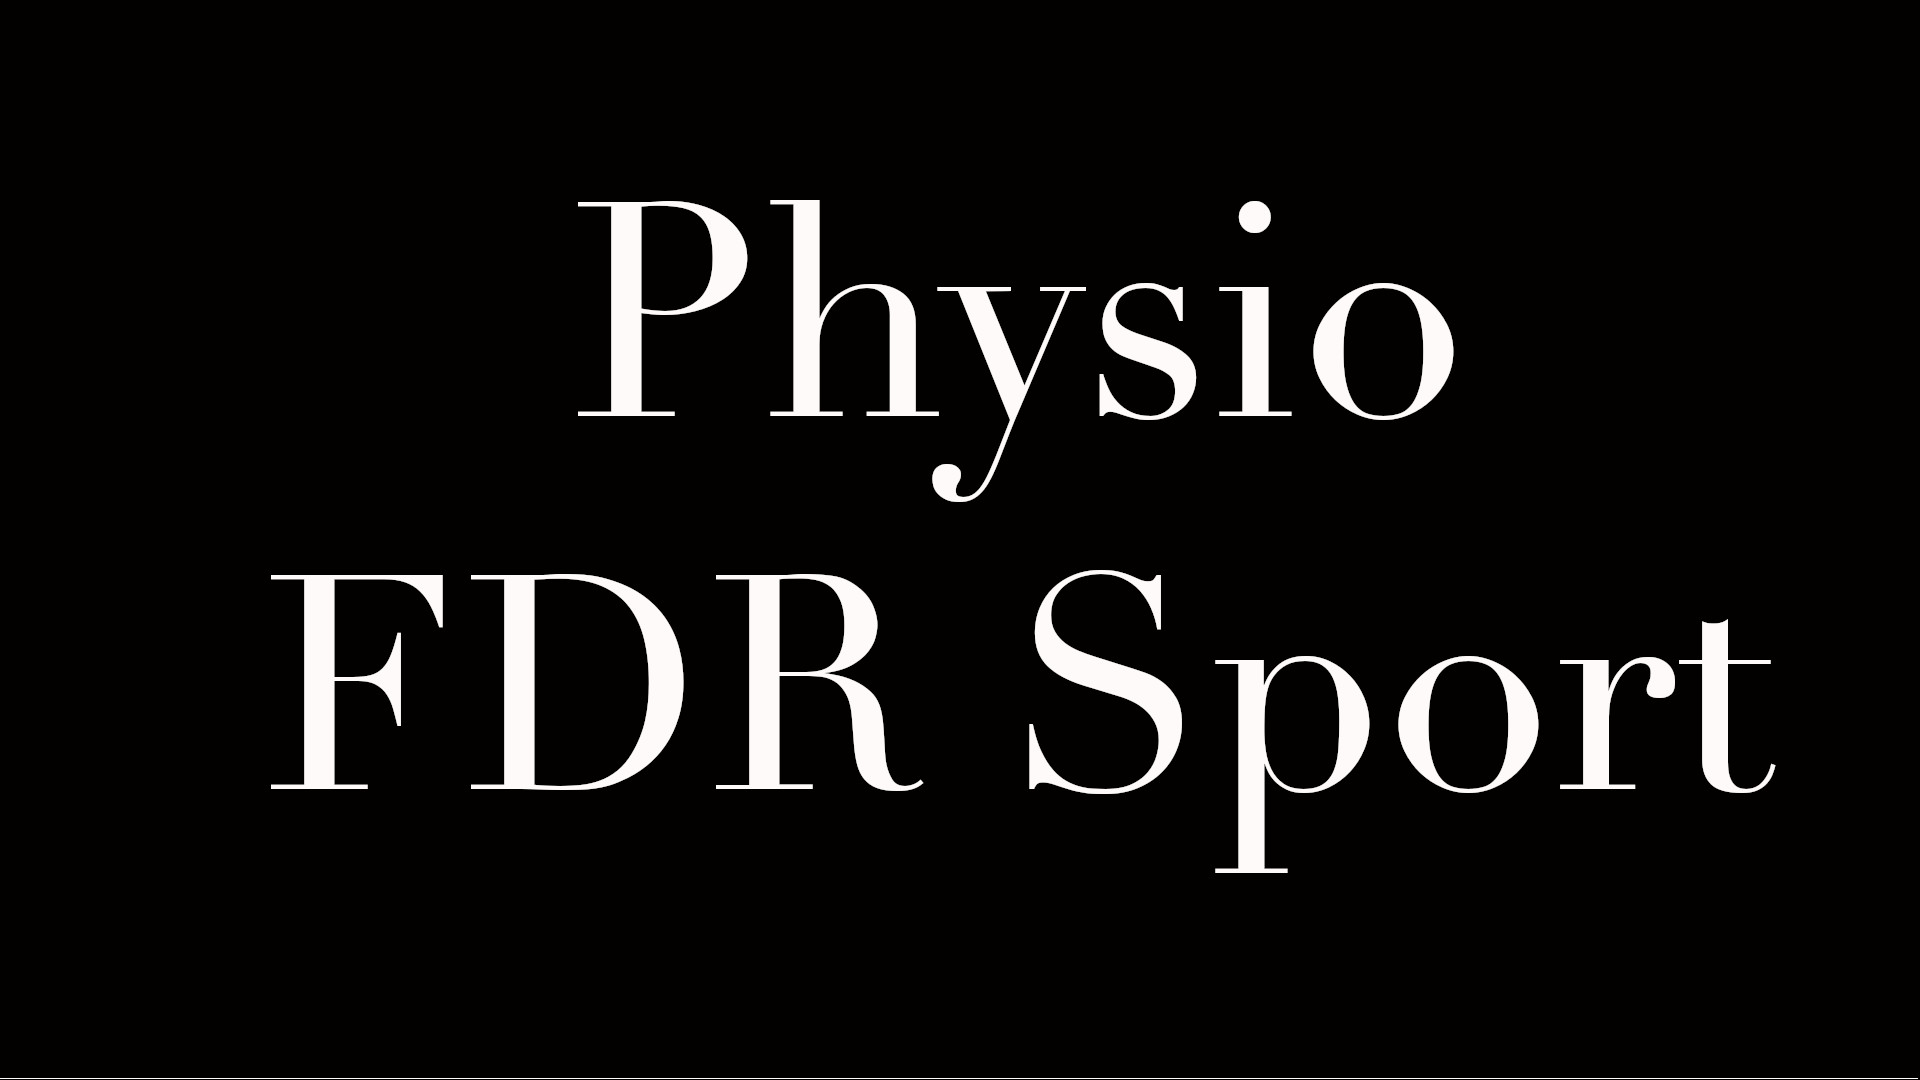 Physio FDR sport